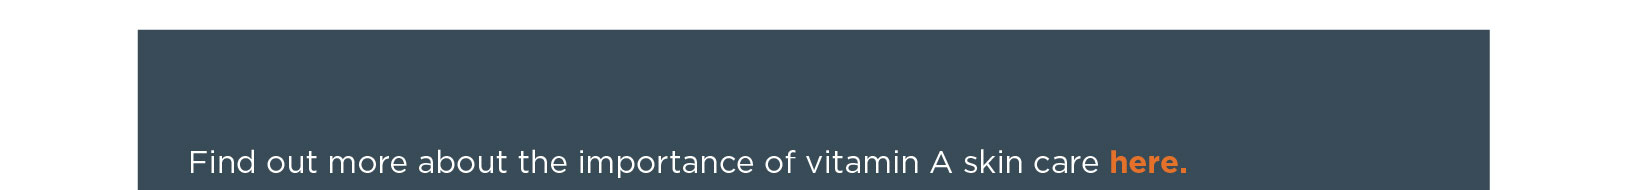 Vitamin-A Skin Care | Environ Skin Care